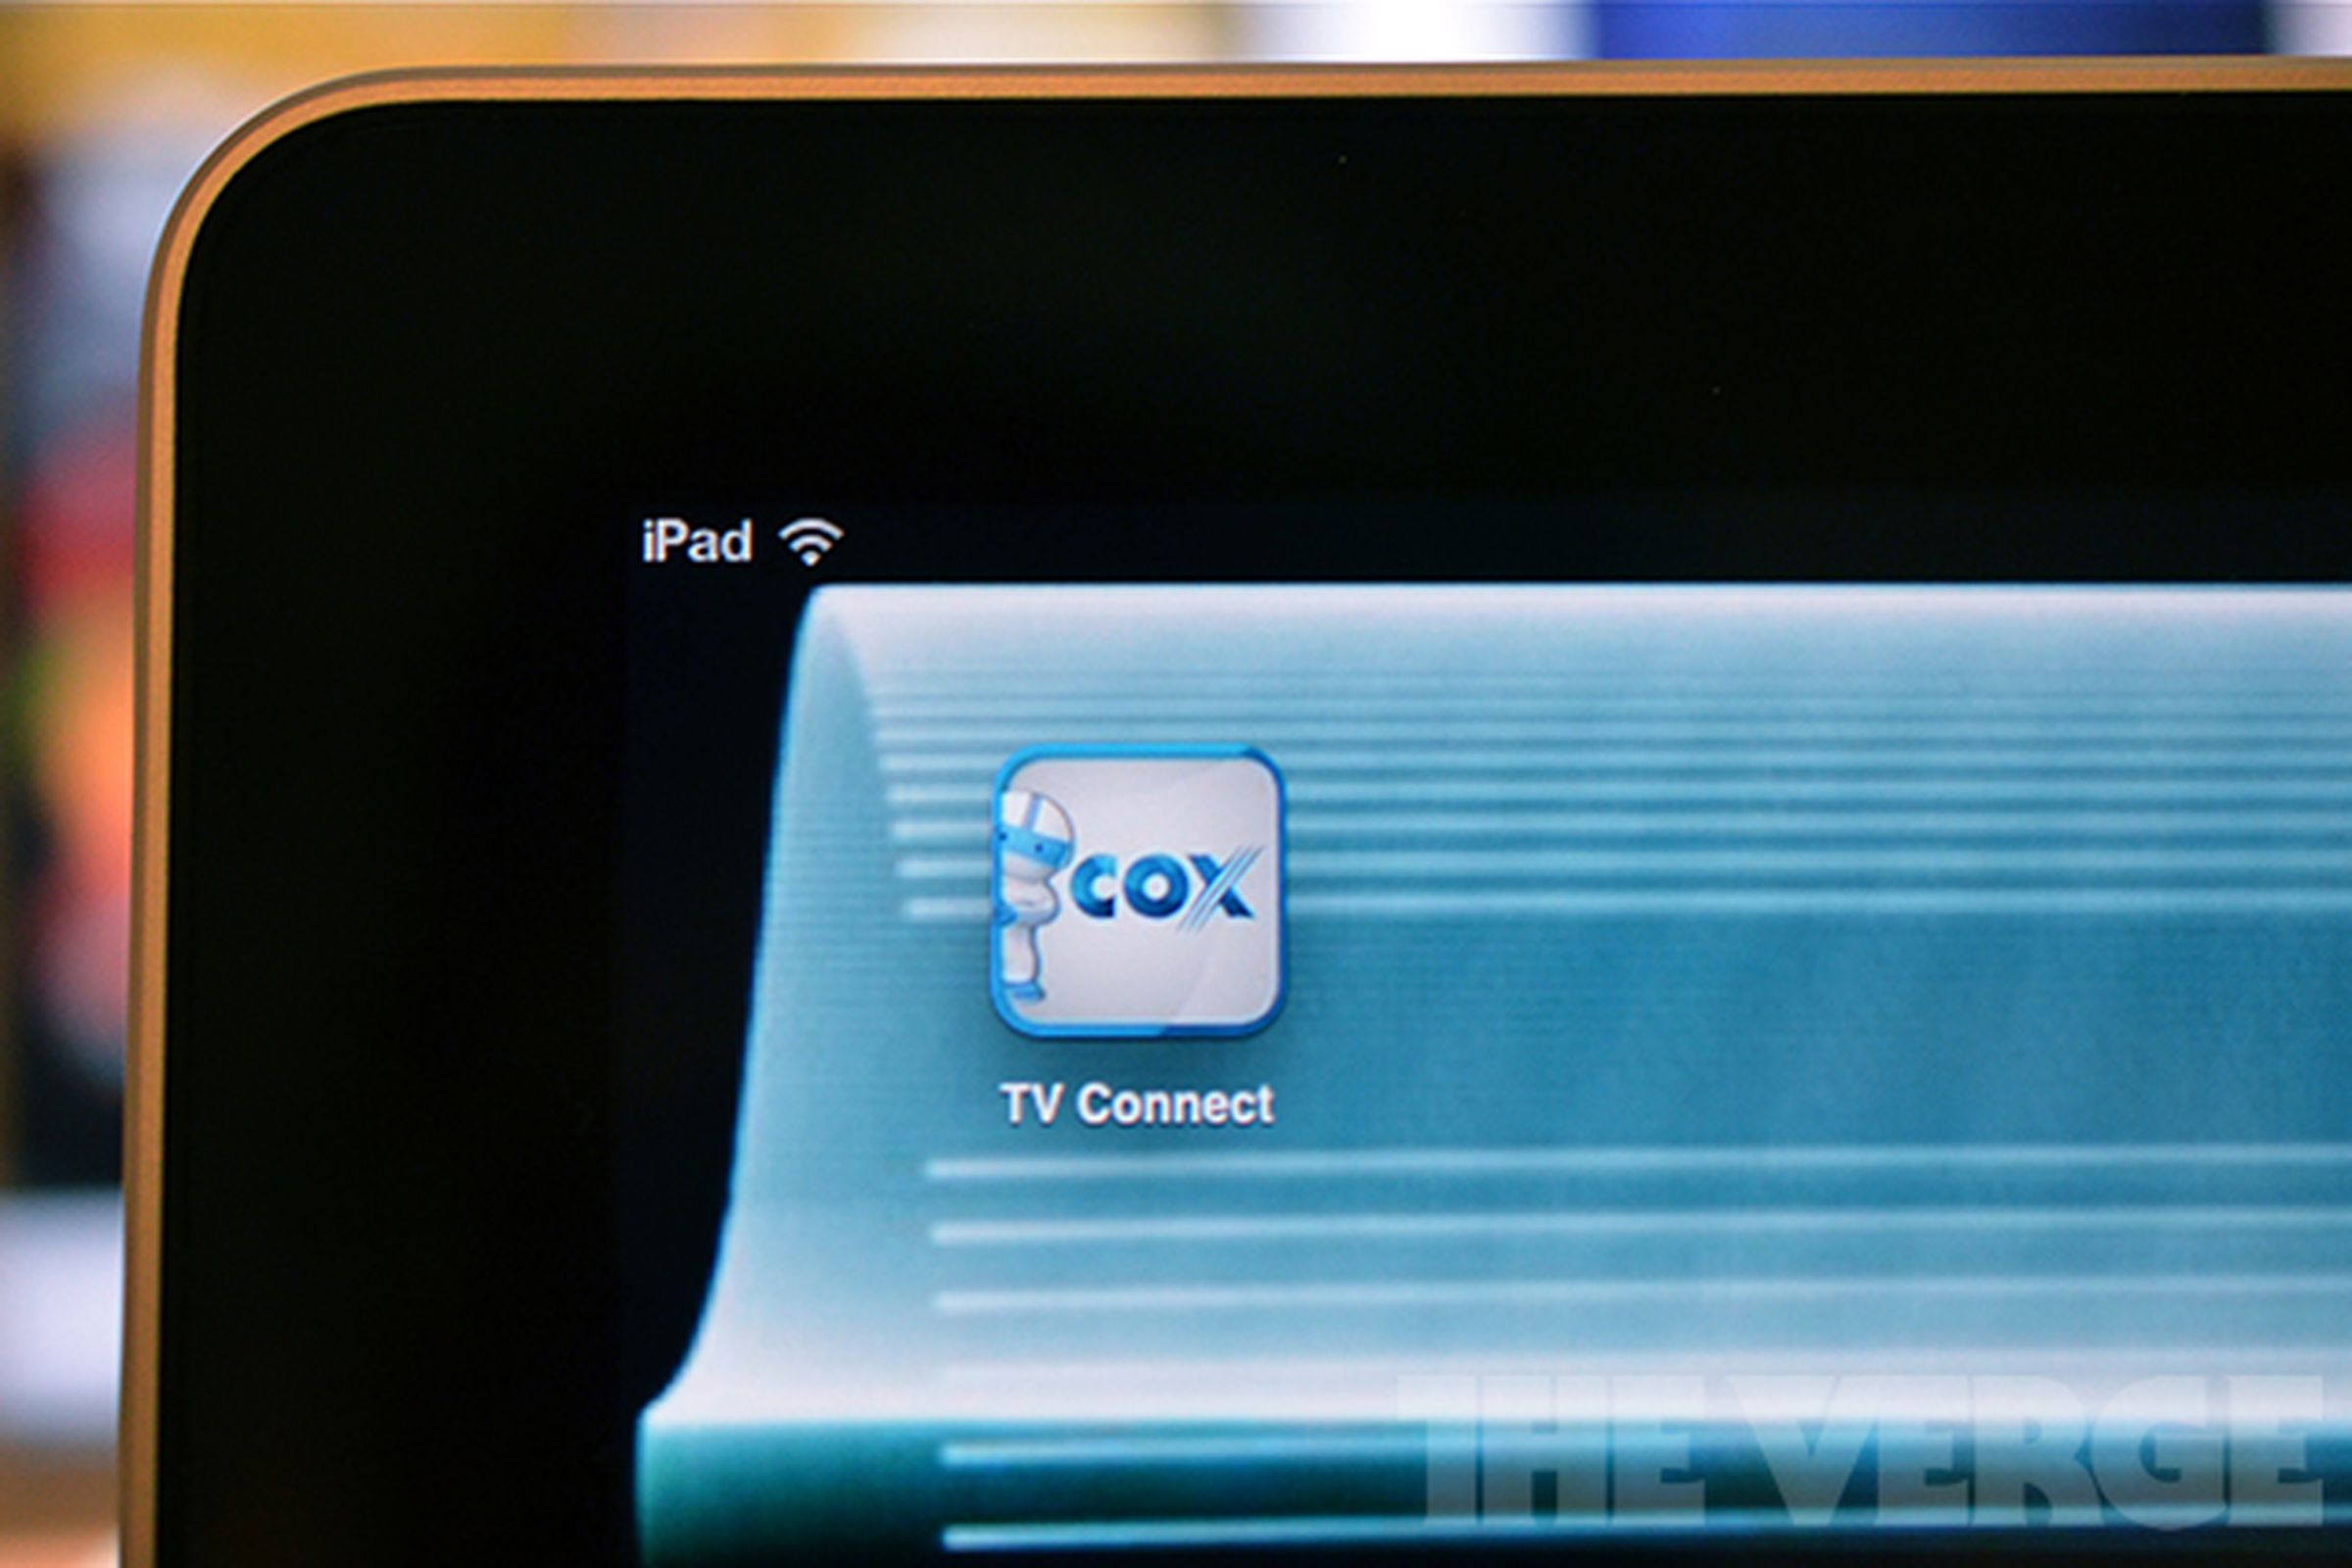 iPad Cox TV Connect app icon